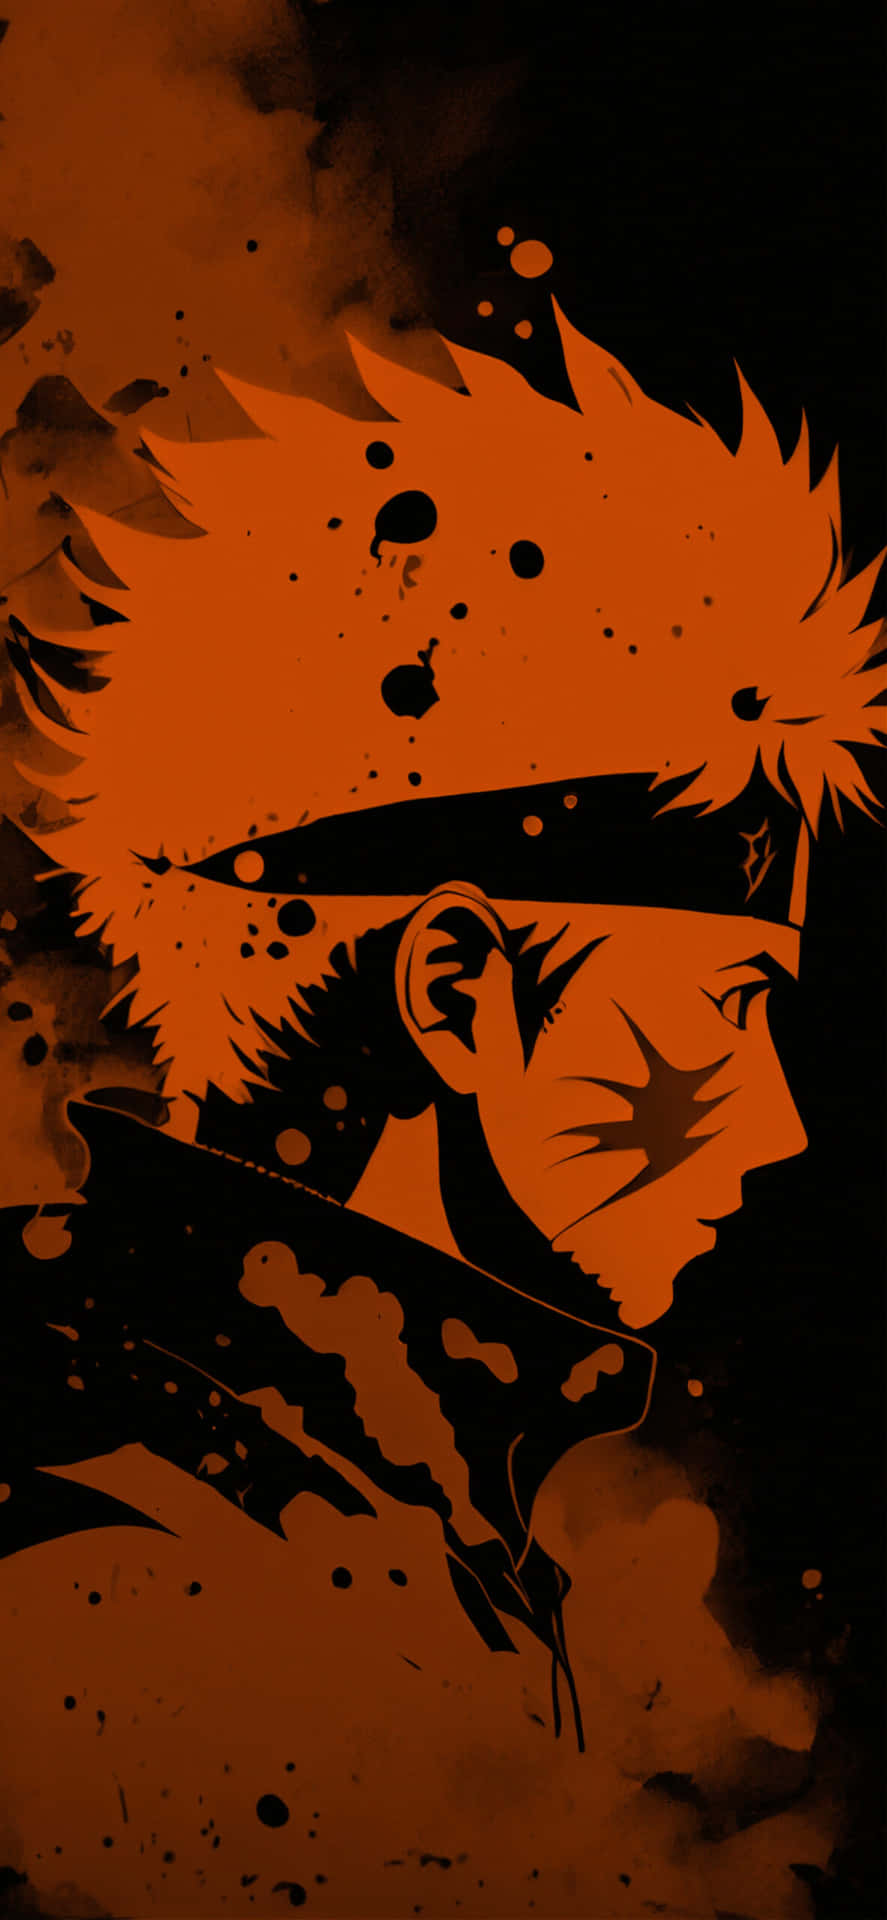 Caption: The Endless Battle - Naruto And Sasuke Locked In Combat